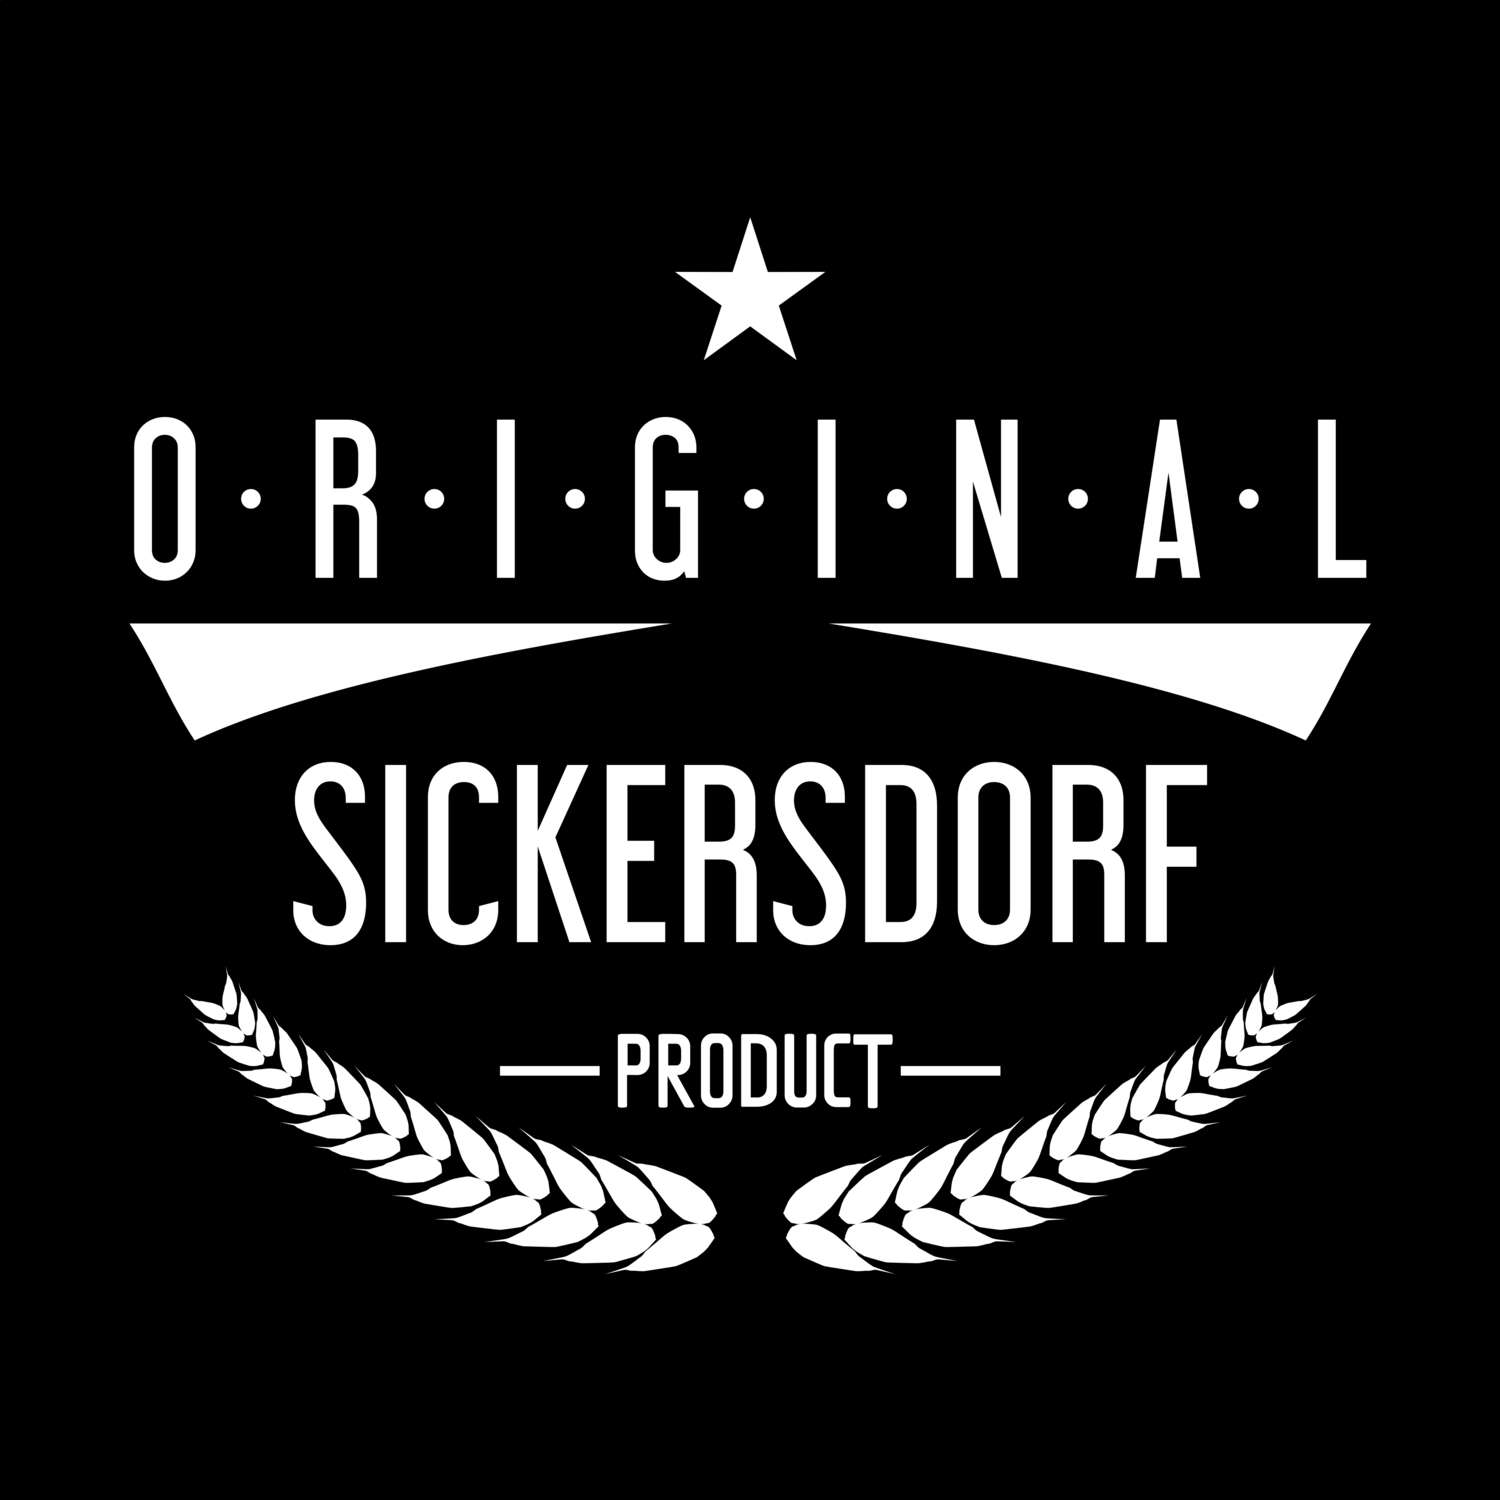 Sickersdorf T-Shirt »Original Product«